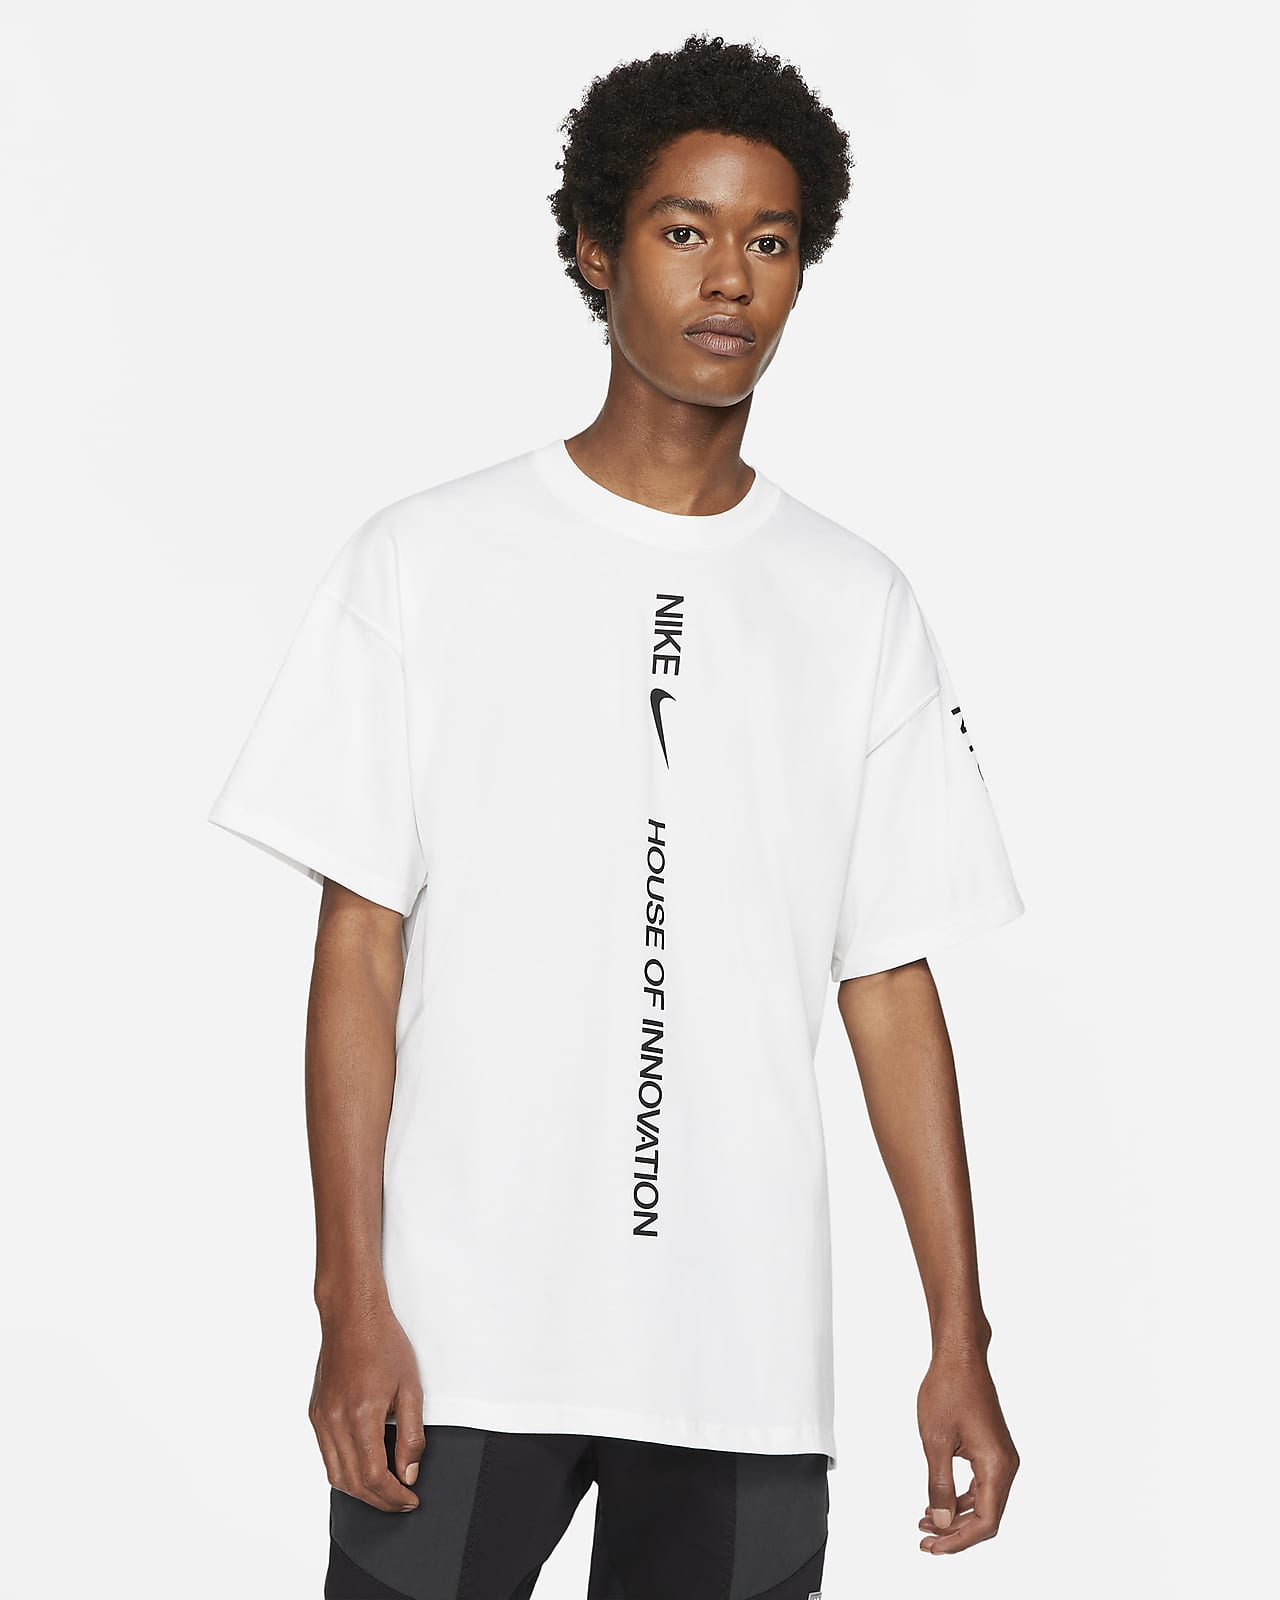 Innovation (NYC) Men's T-Shirt. Nike 